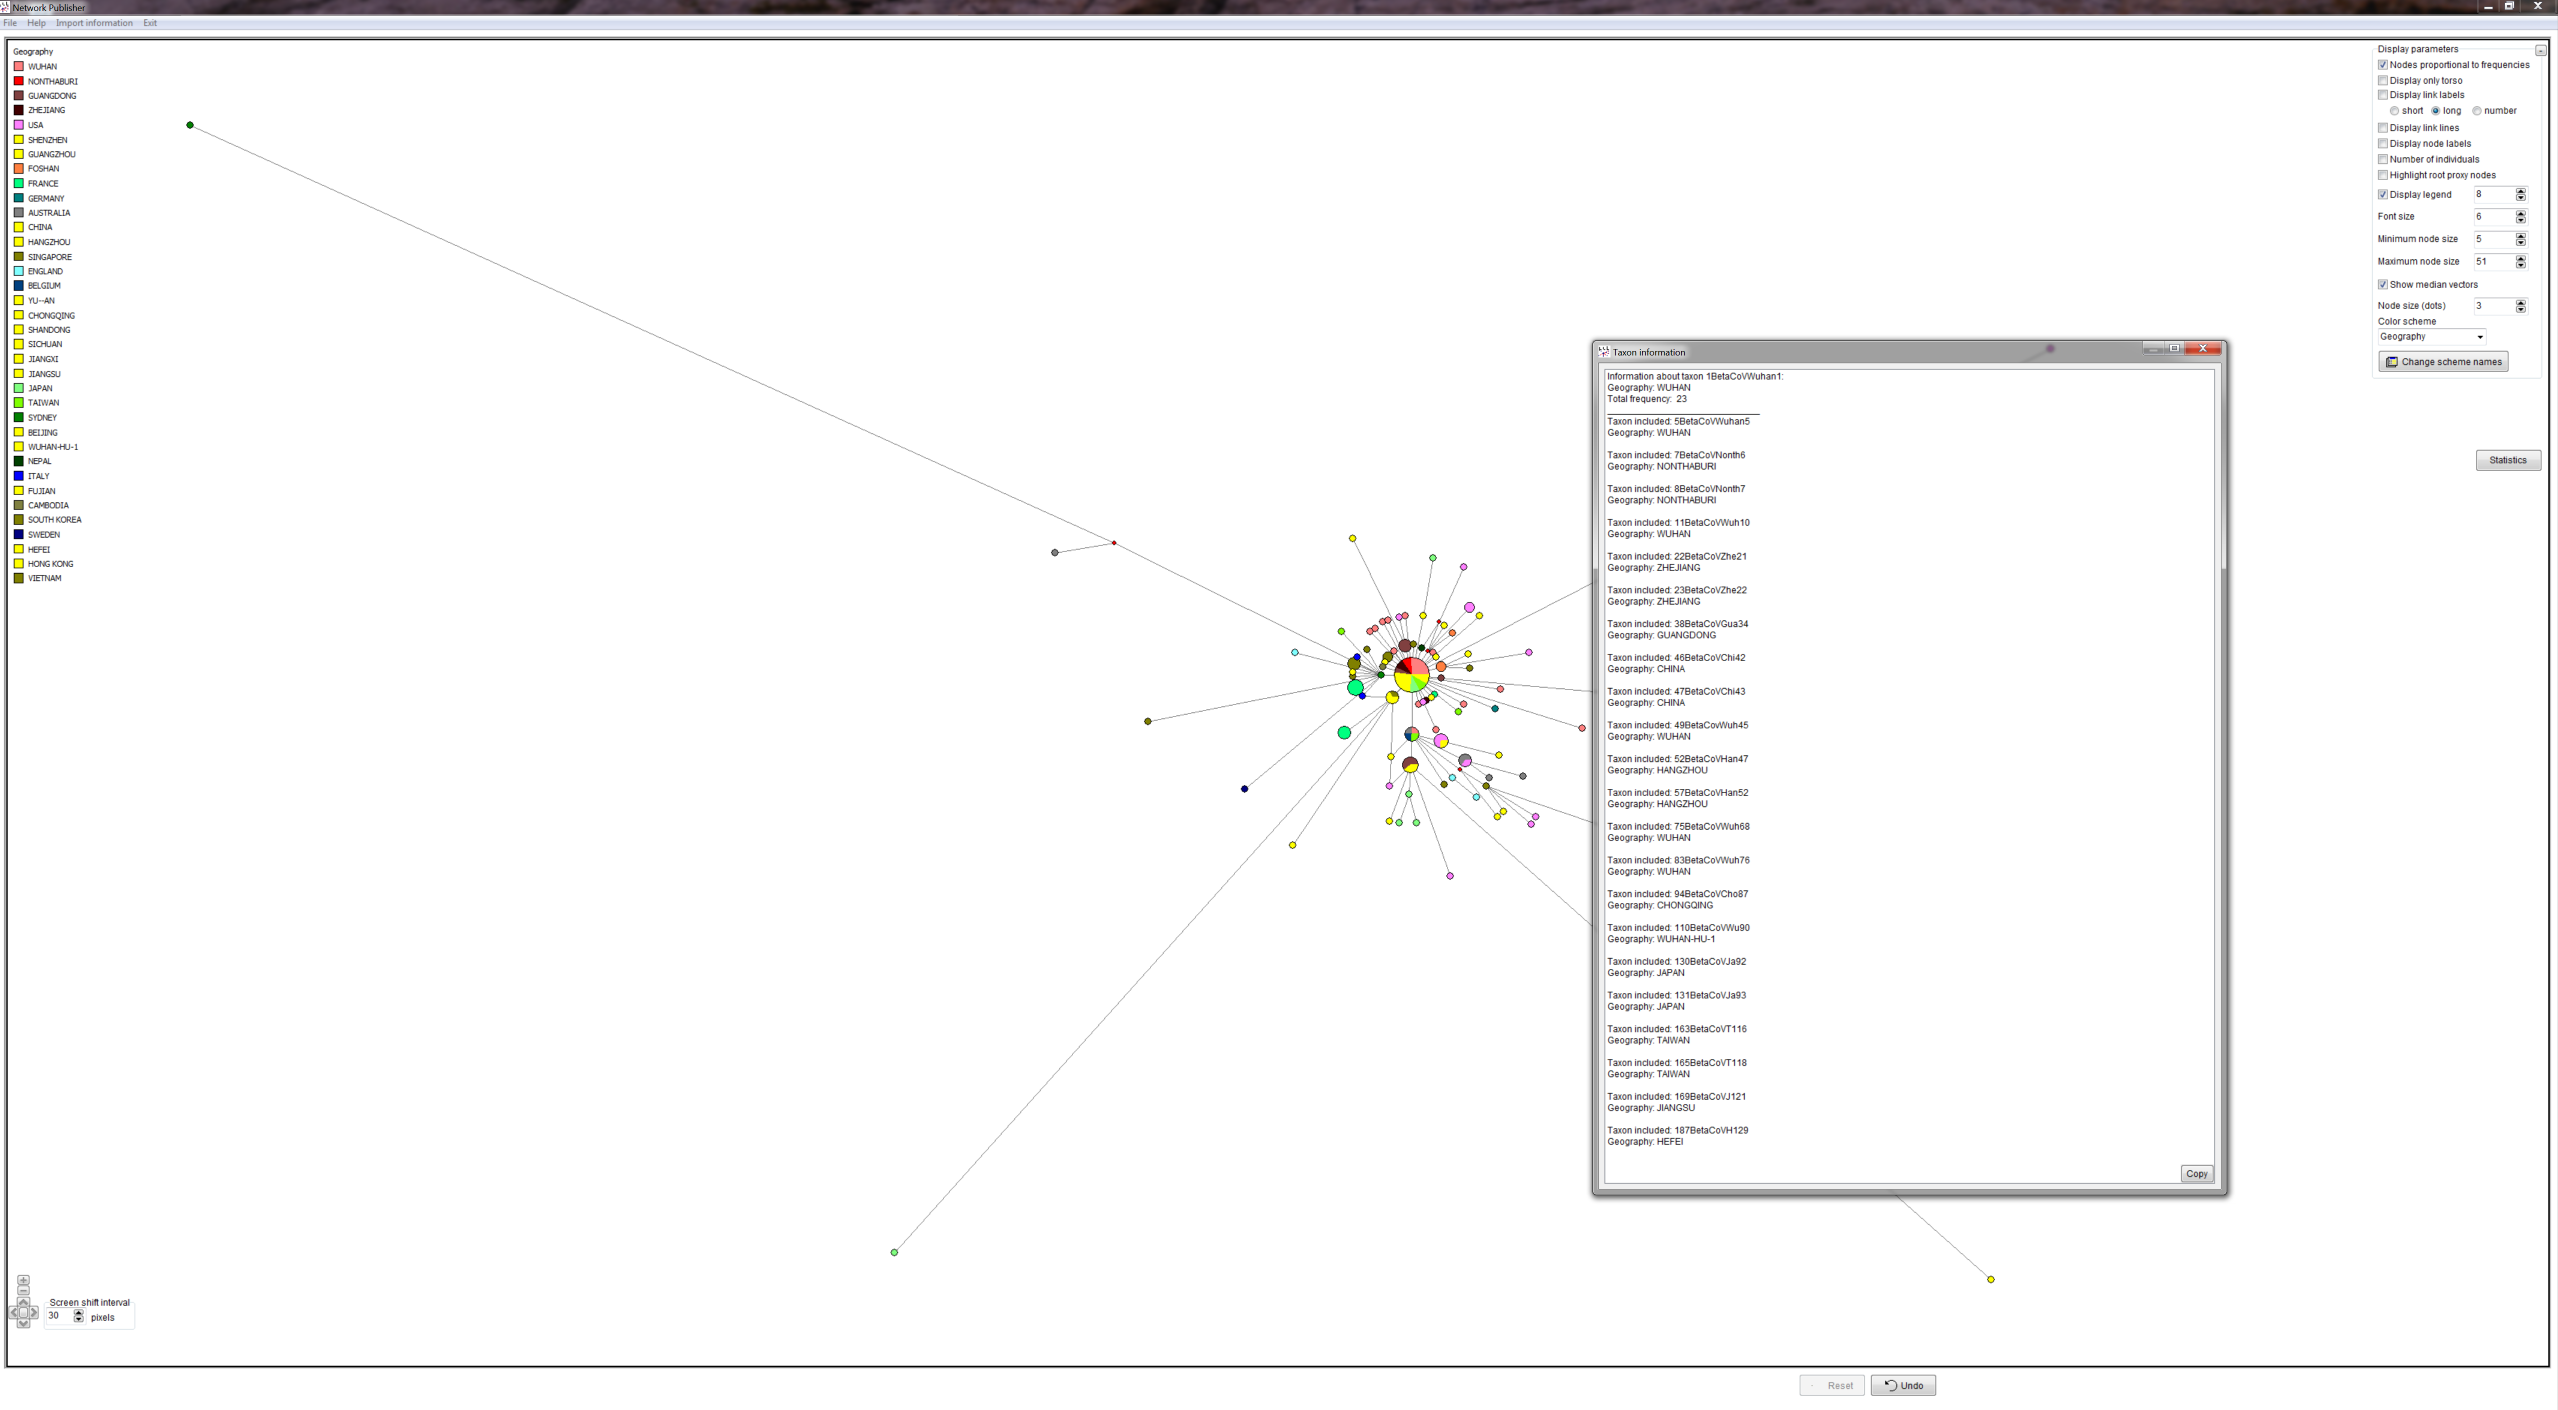 screenshot world COVID-19 phylogeographic network